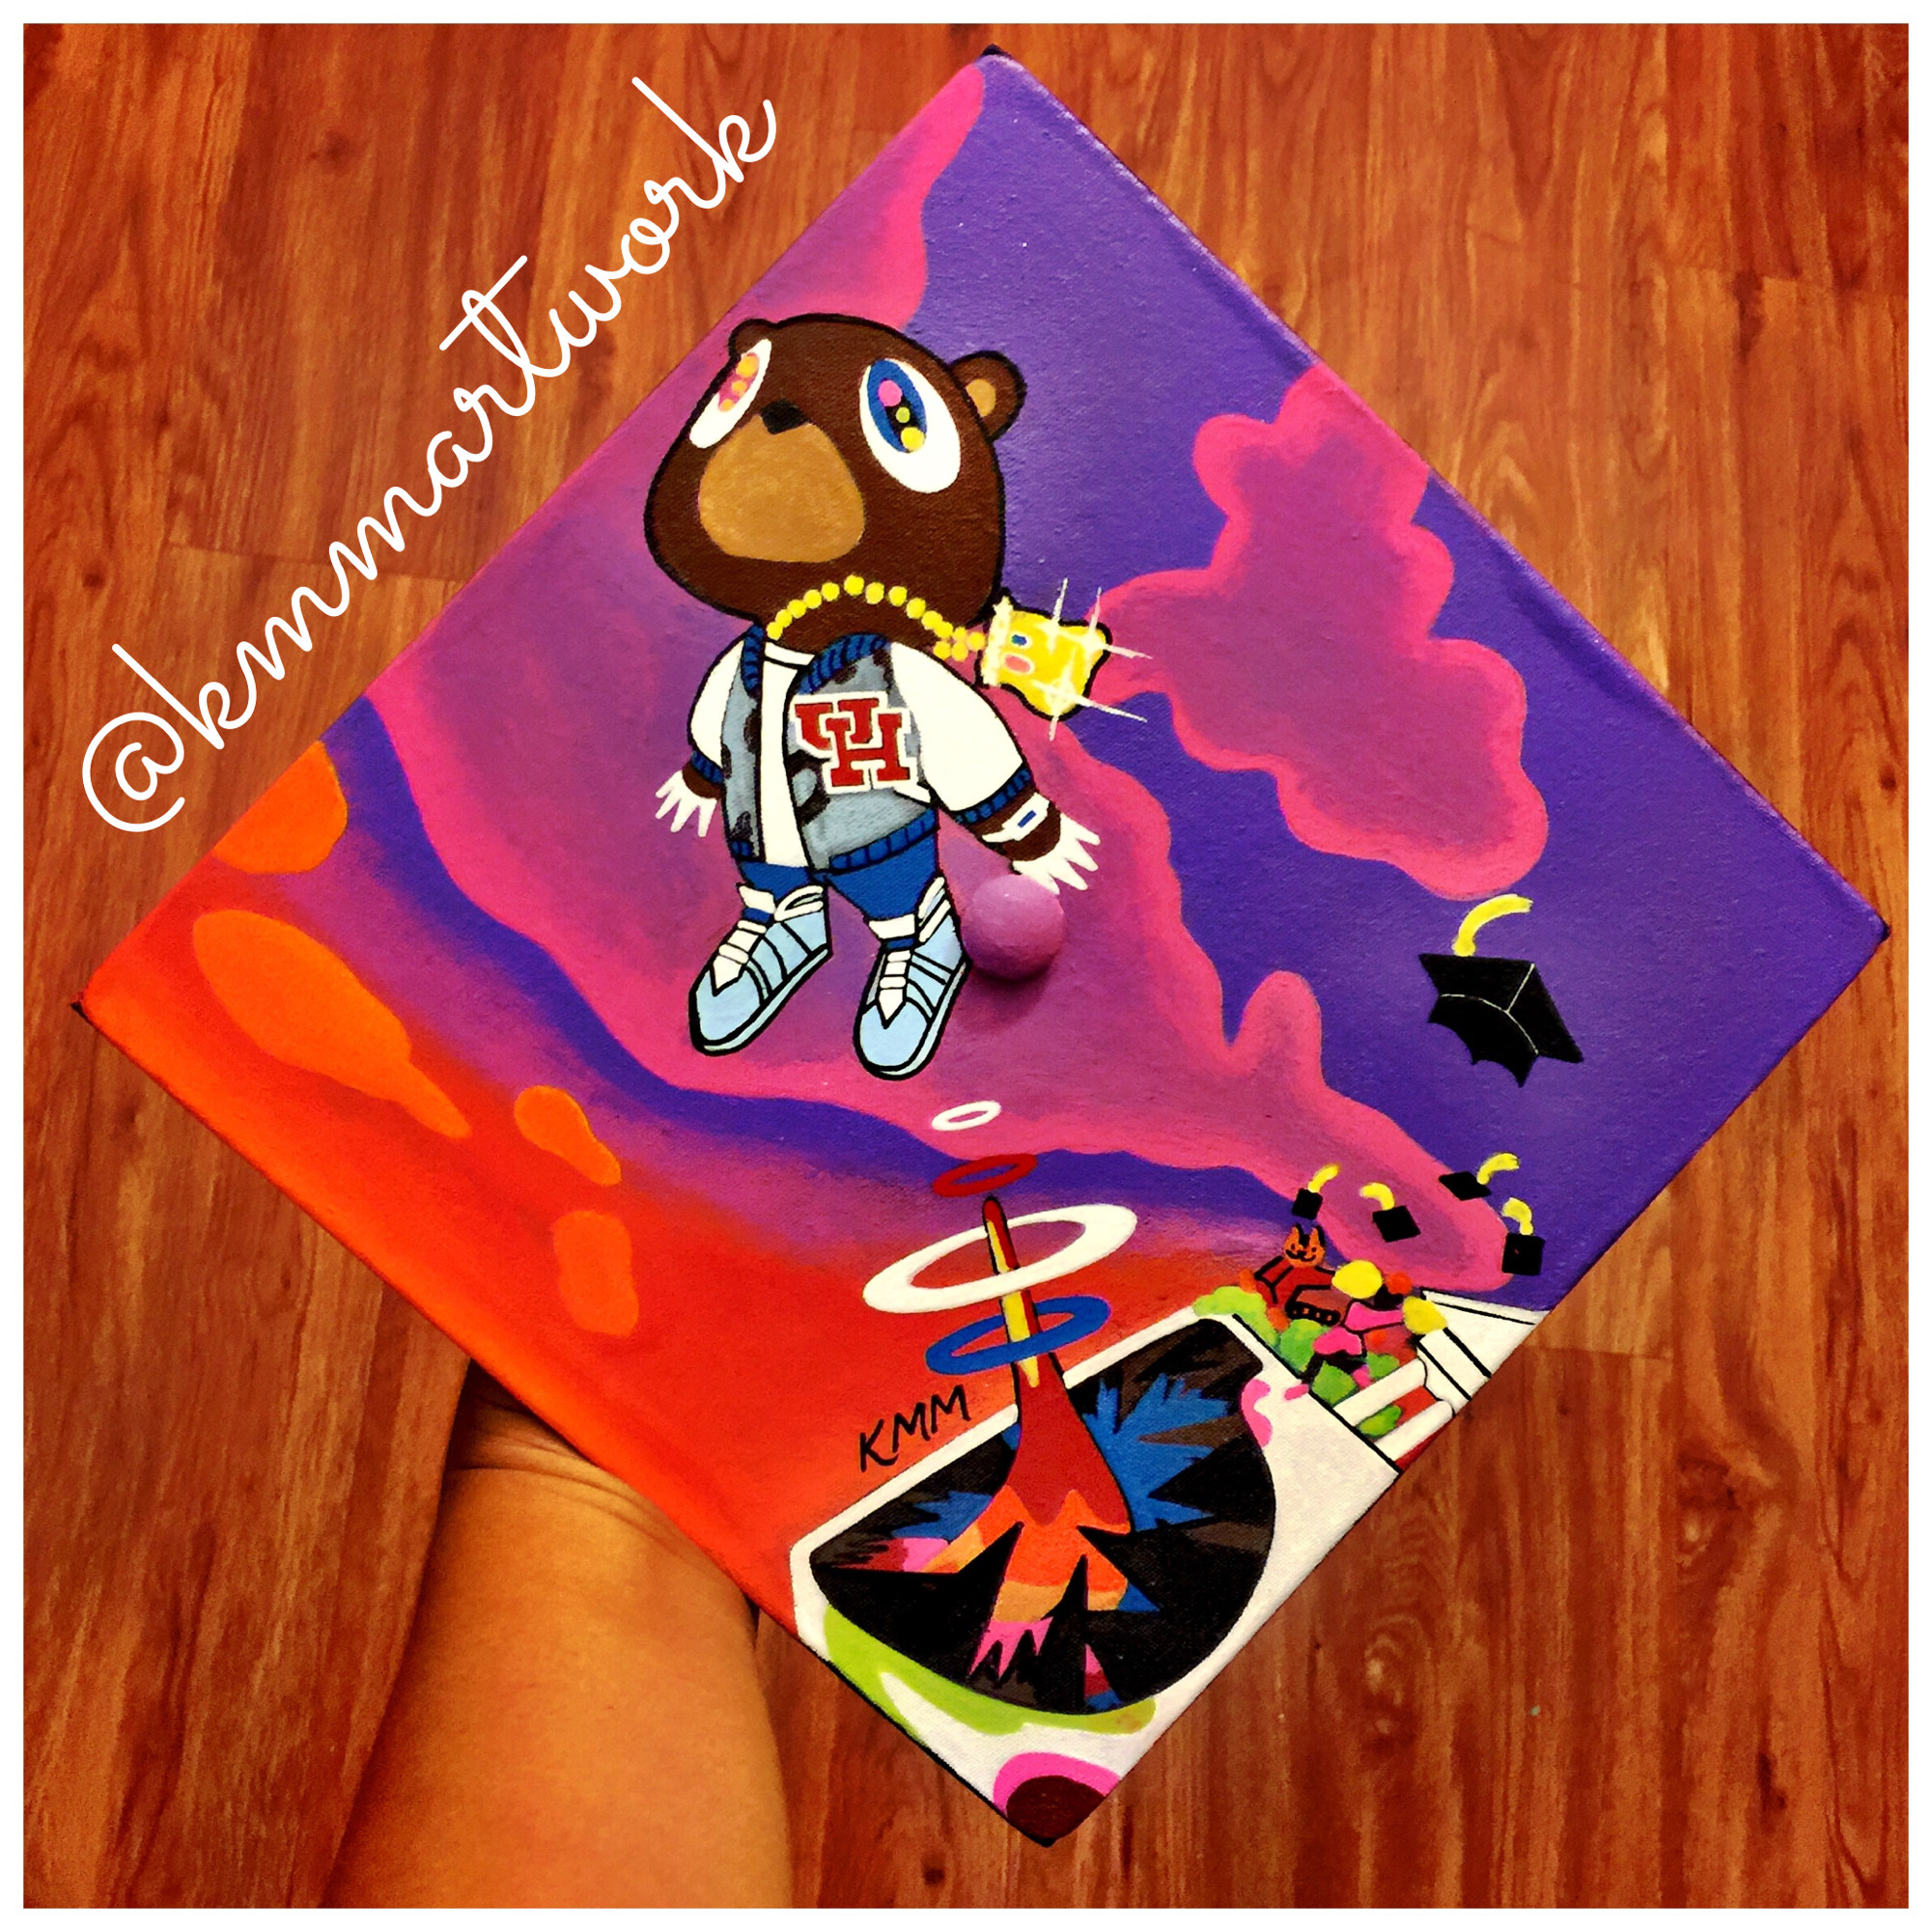 2001x1999 Graduation Cap - Kanye West Graduation Album Cover - University of Houston  - KMM Artwork -